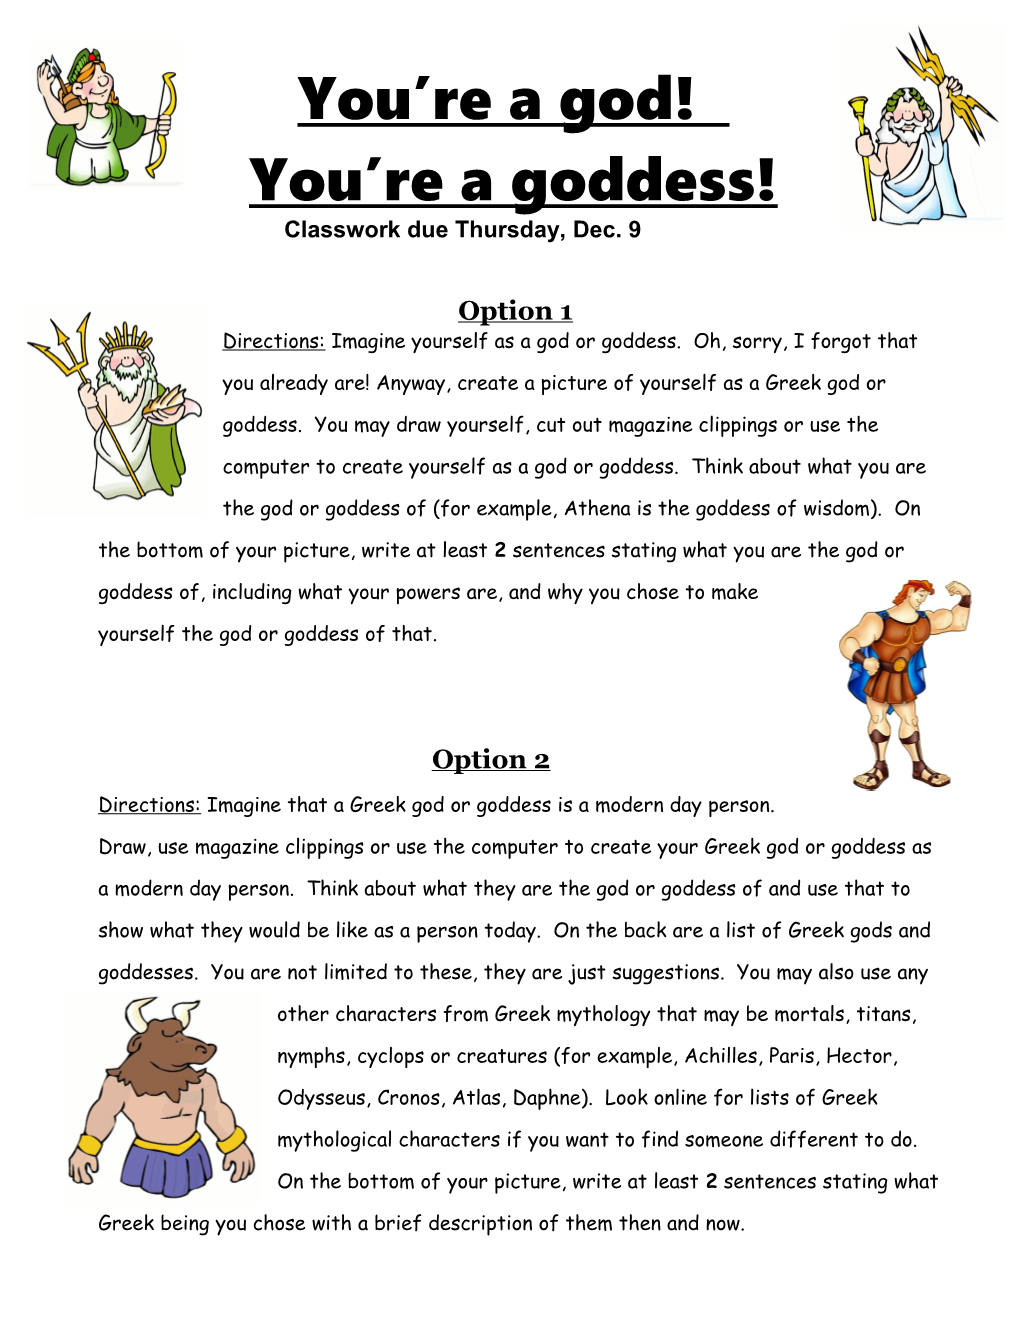 You Re a Goddess!